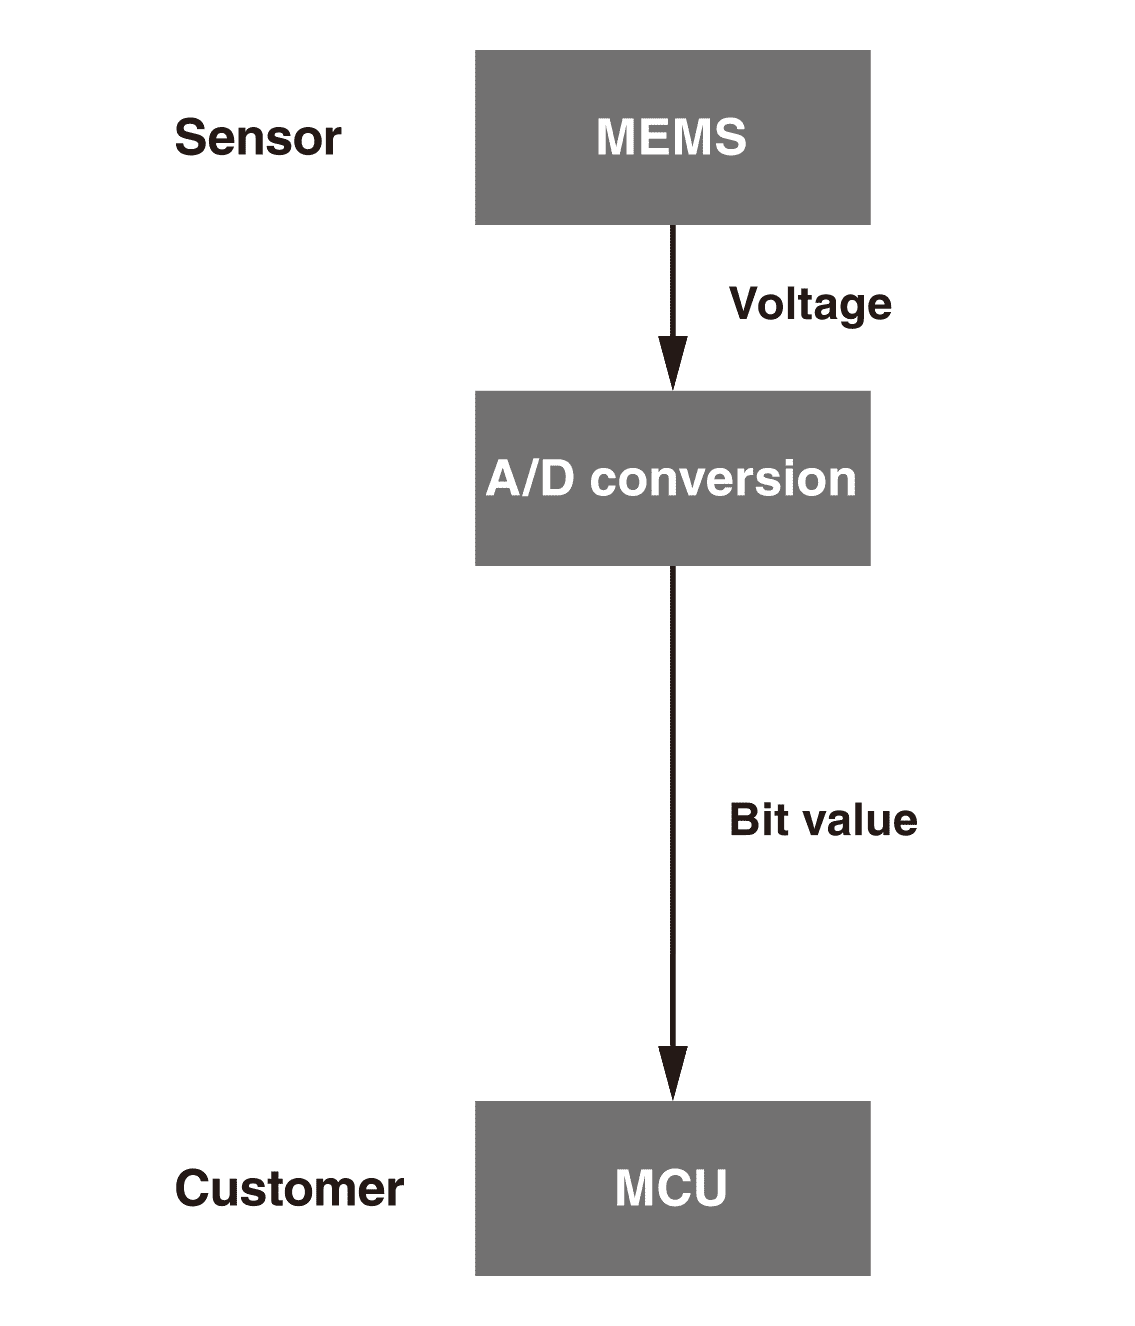 Sensor MEMS(Voltage) -> A/D conversion(Bit value) -> Customer MCU